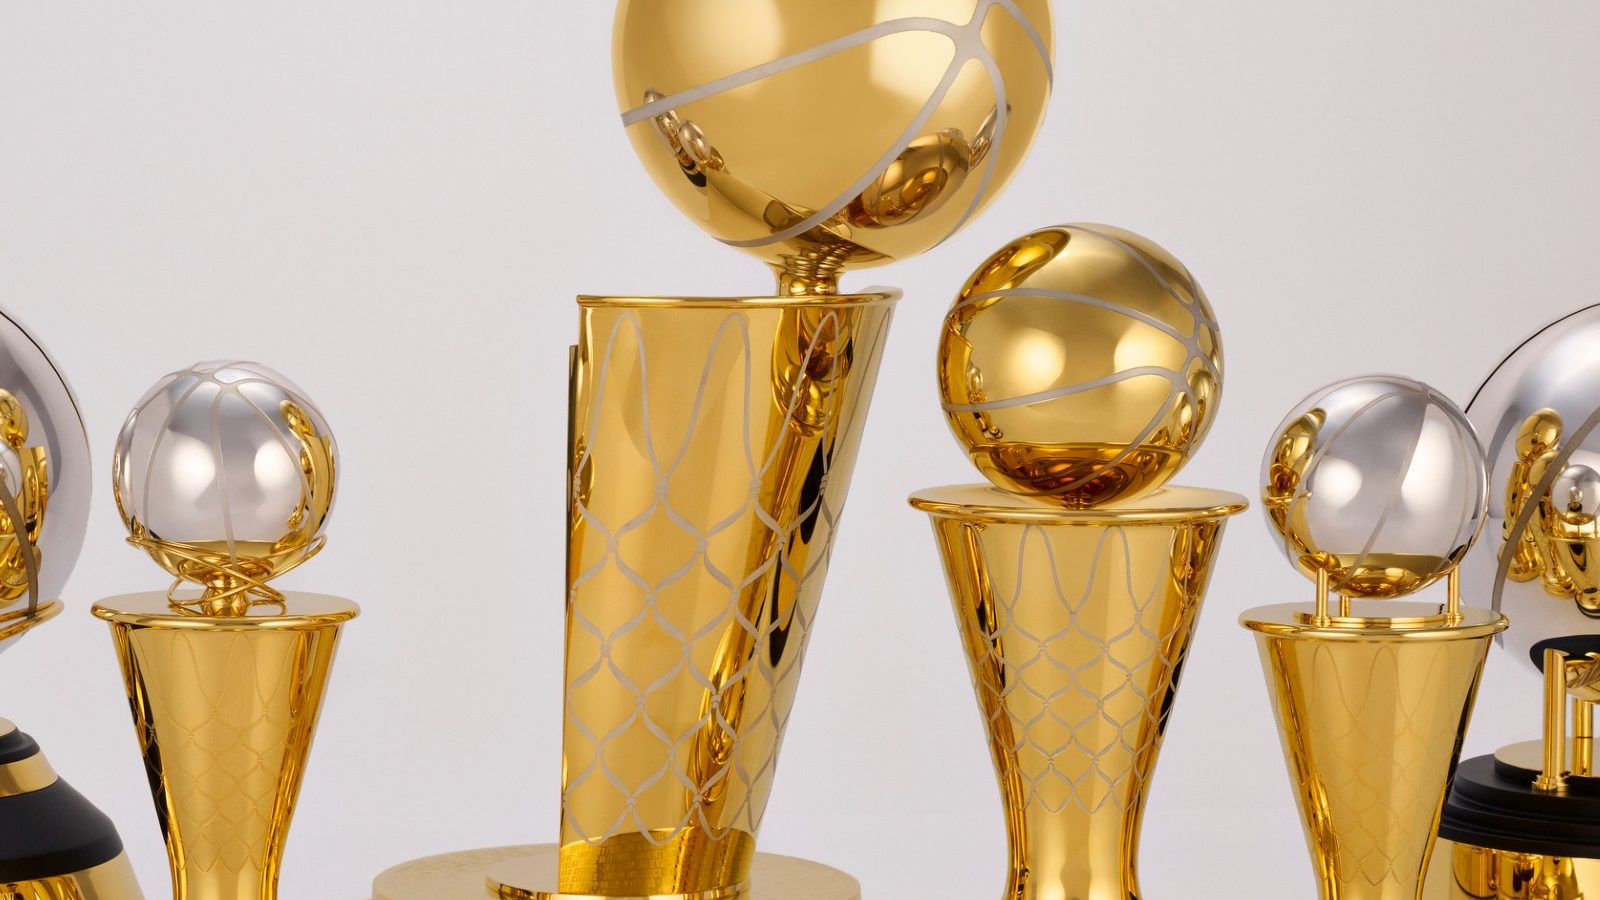 NBA Tweaks Design of Trophies, Adds Conference Finals MVPs - News18